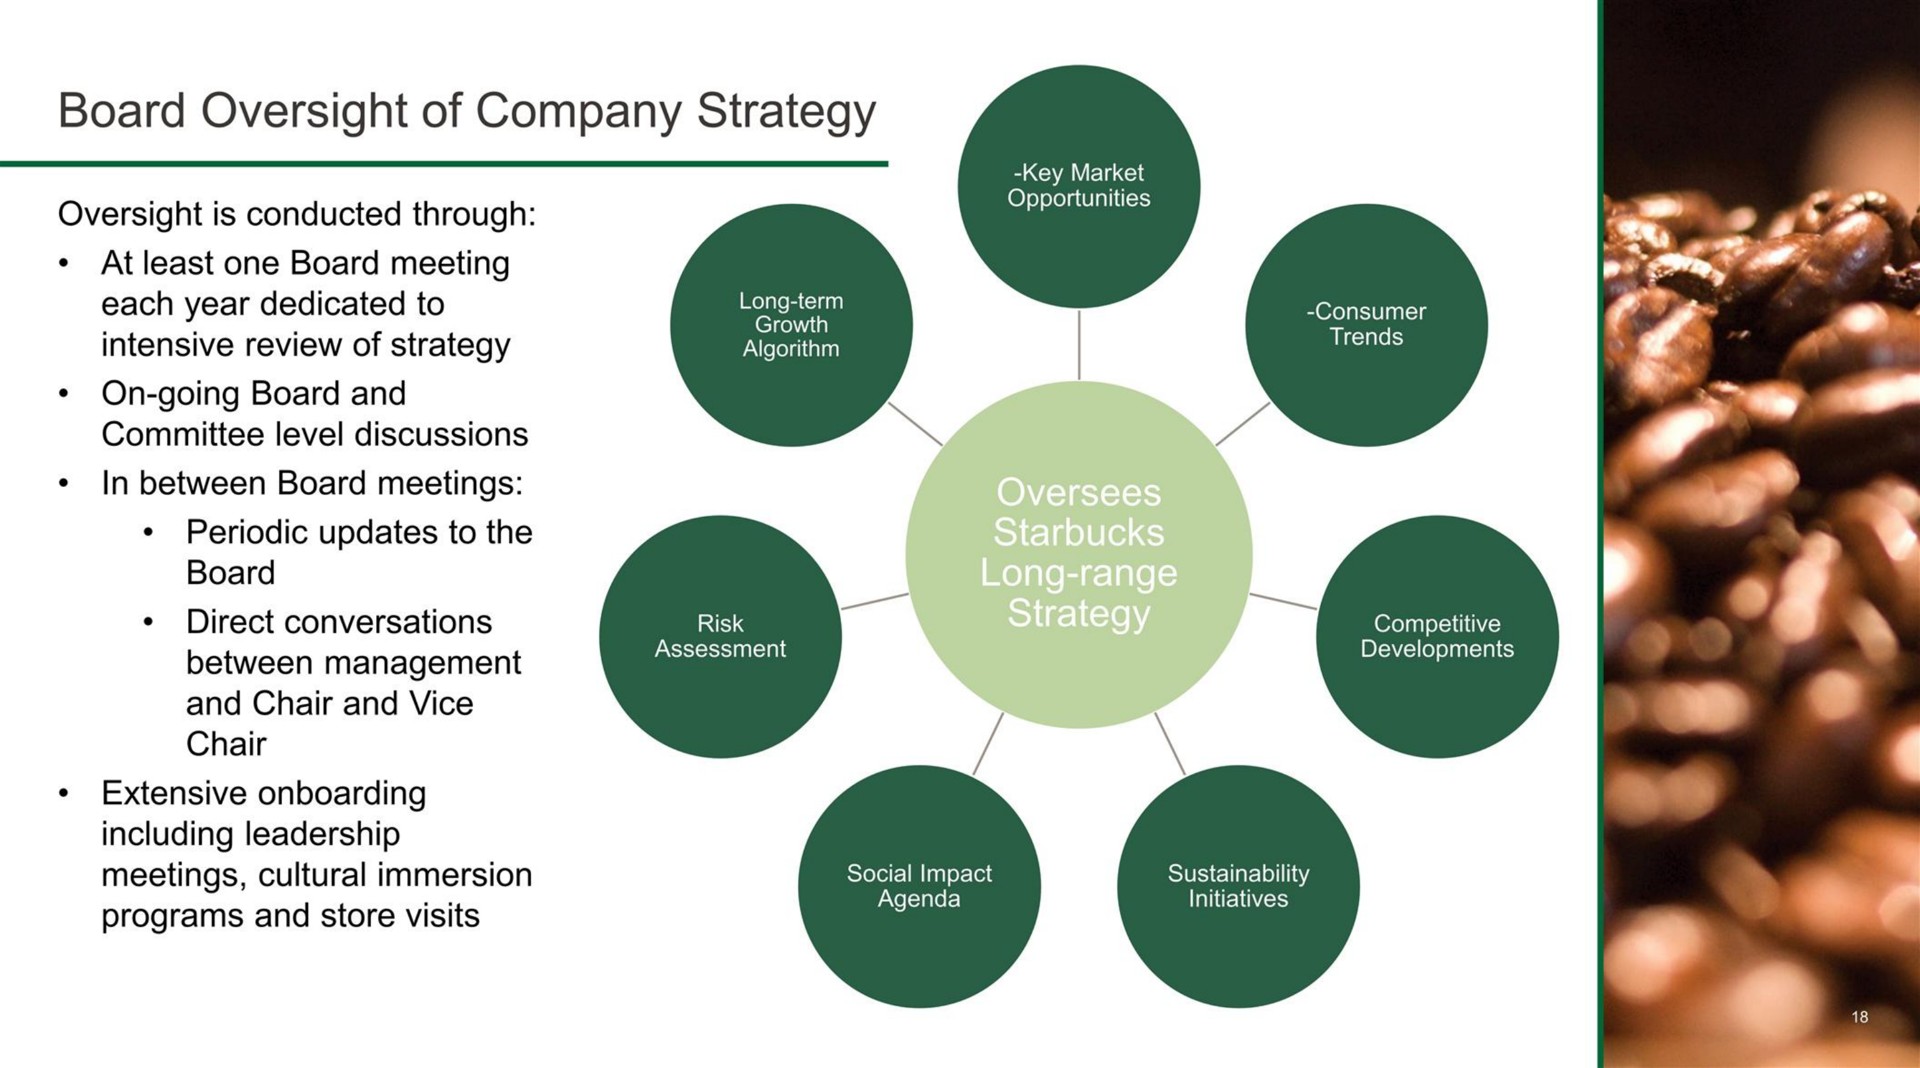 board oversight of company strategy | Starbucks